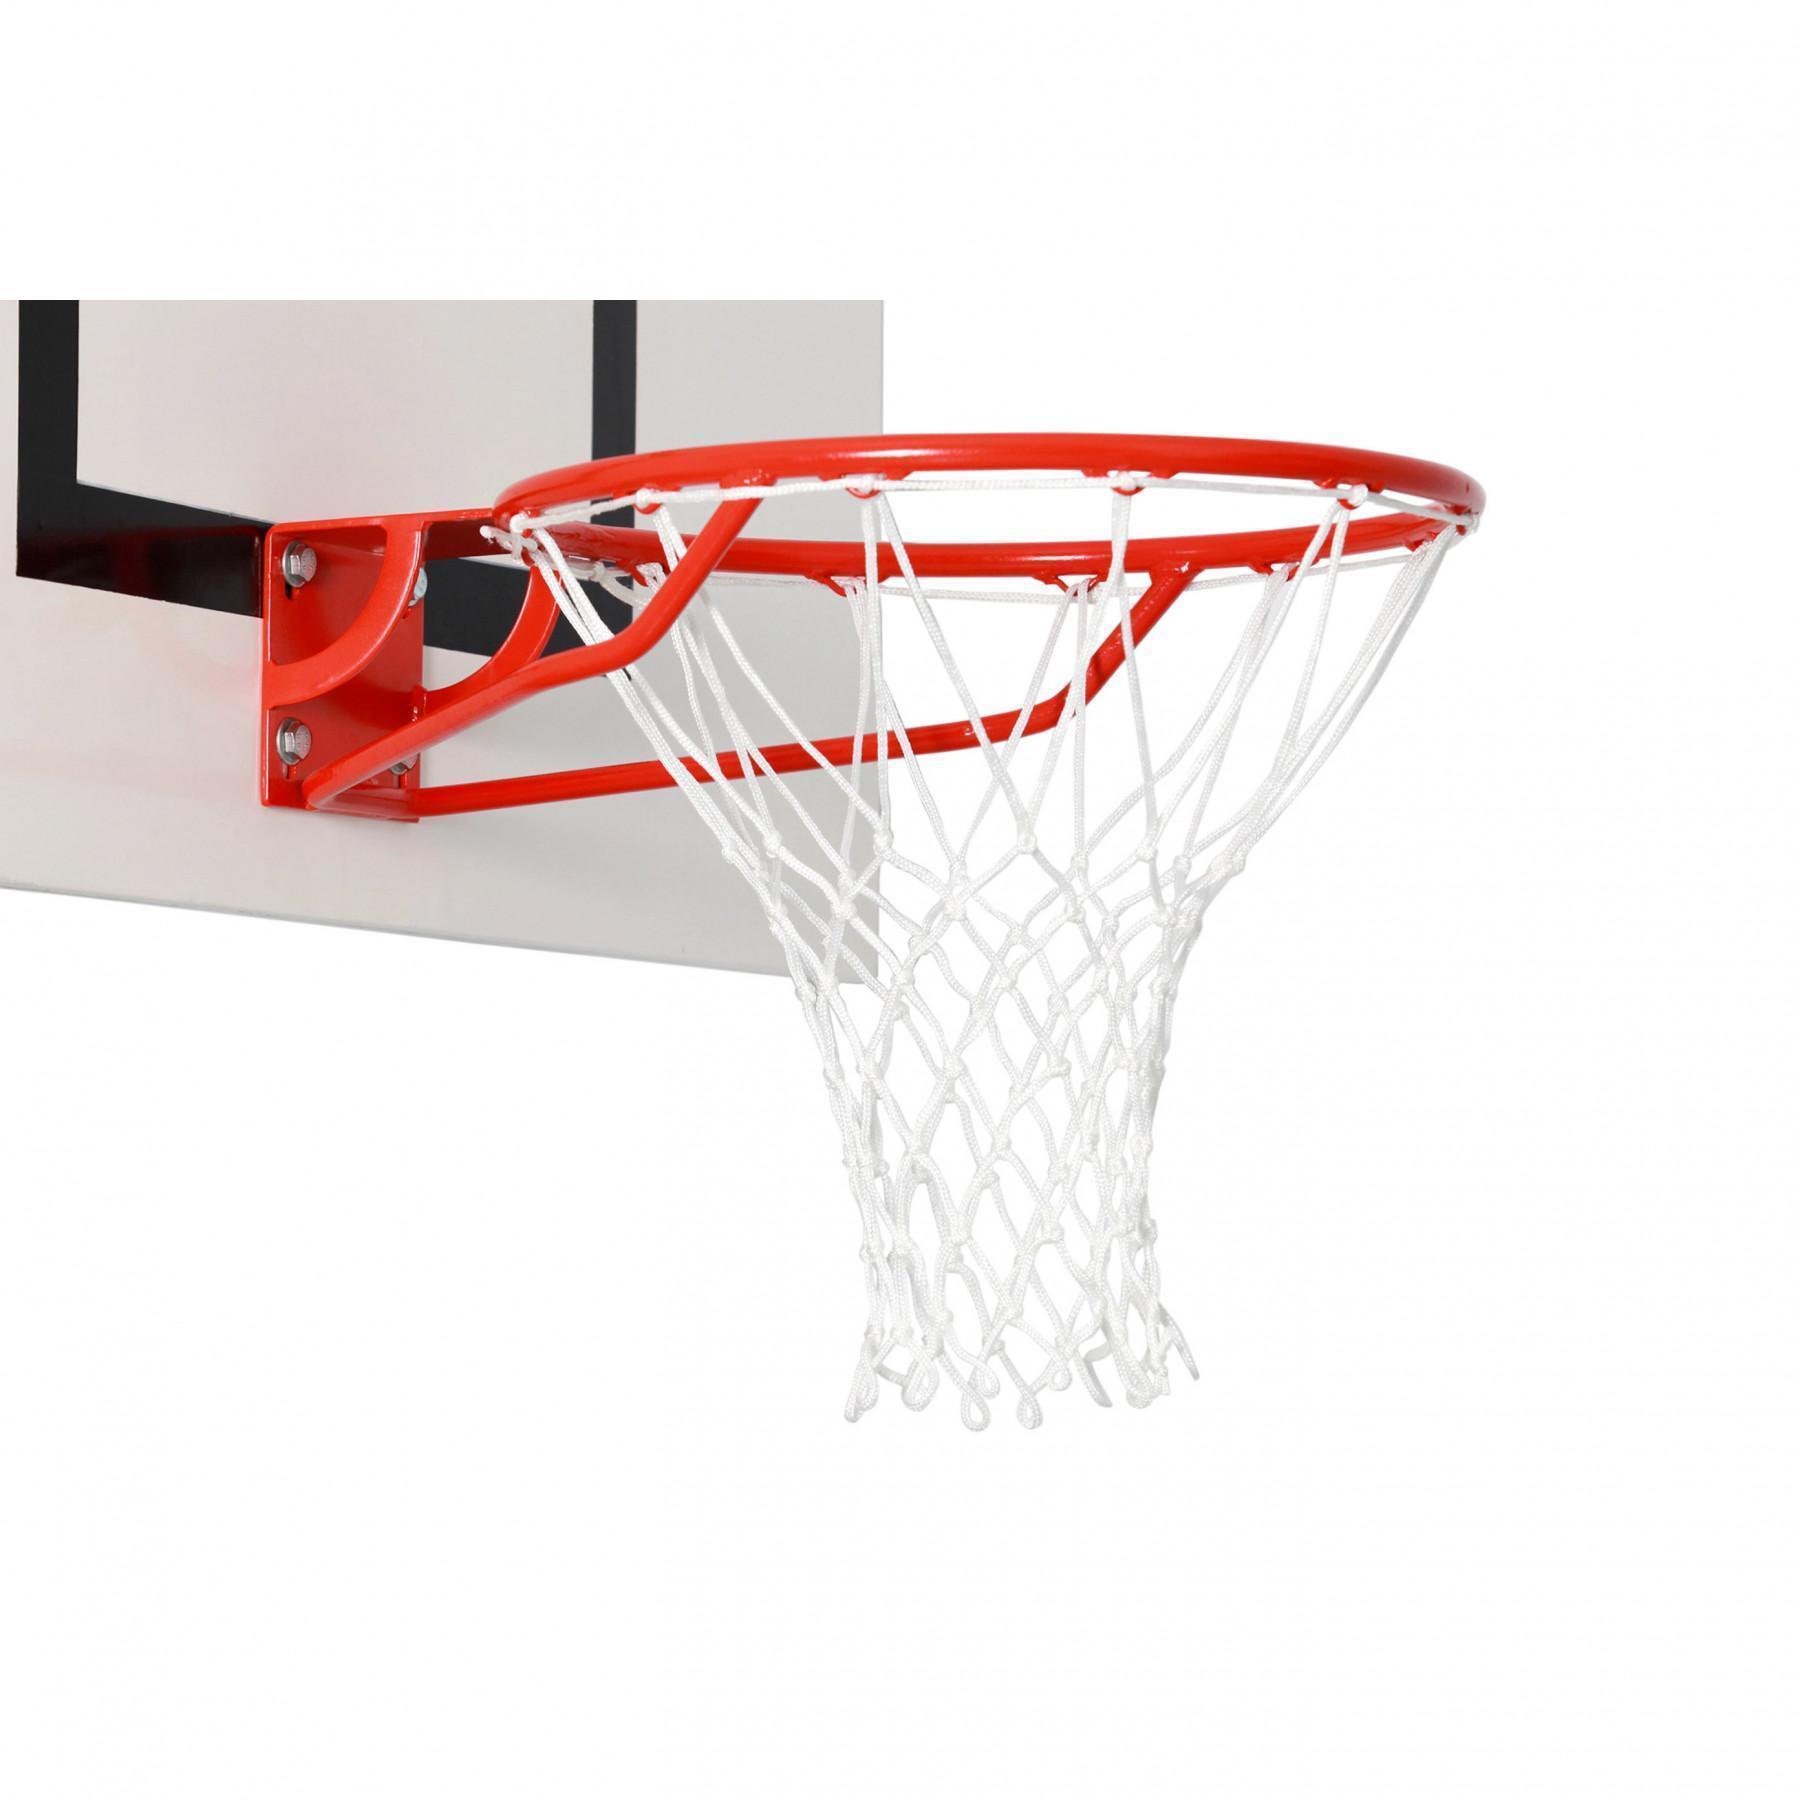 Rede de basquetebol de 5 mm PowerShot